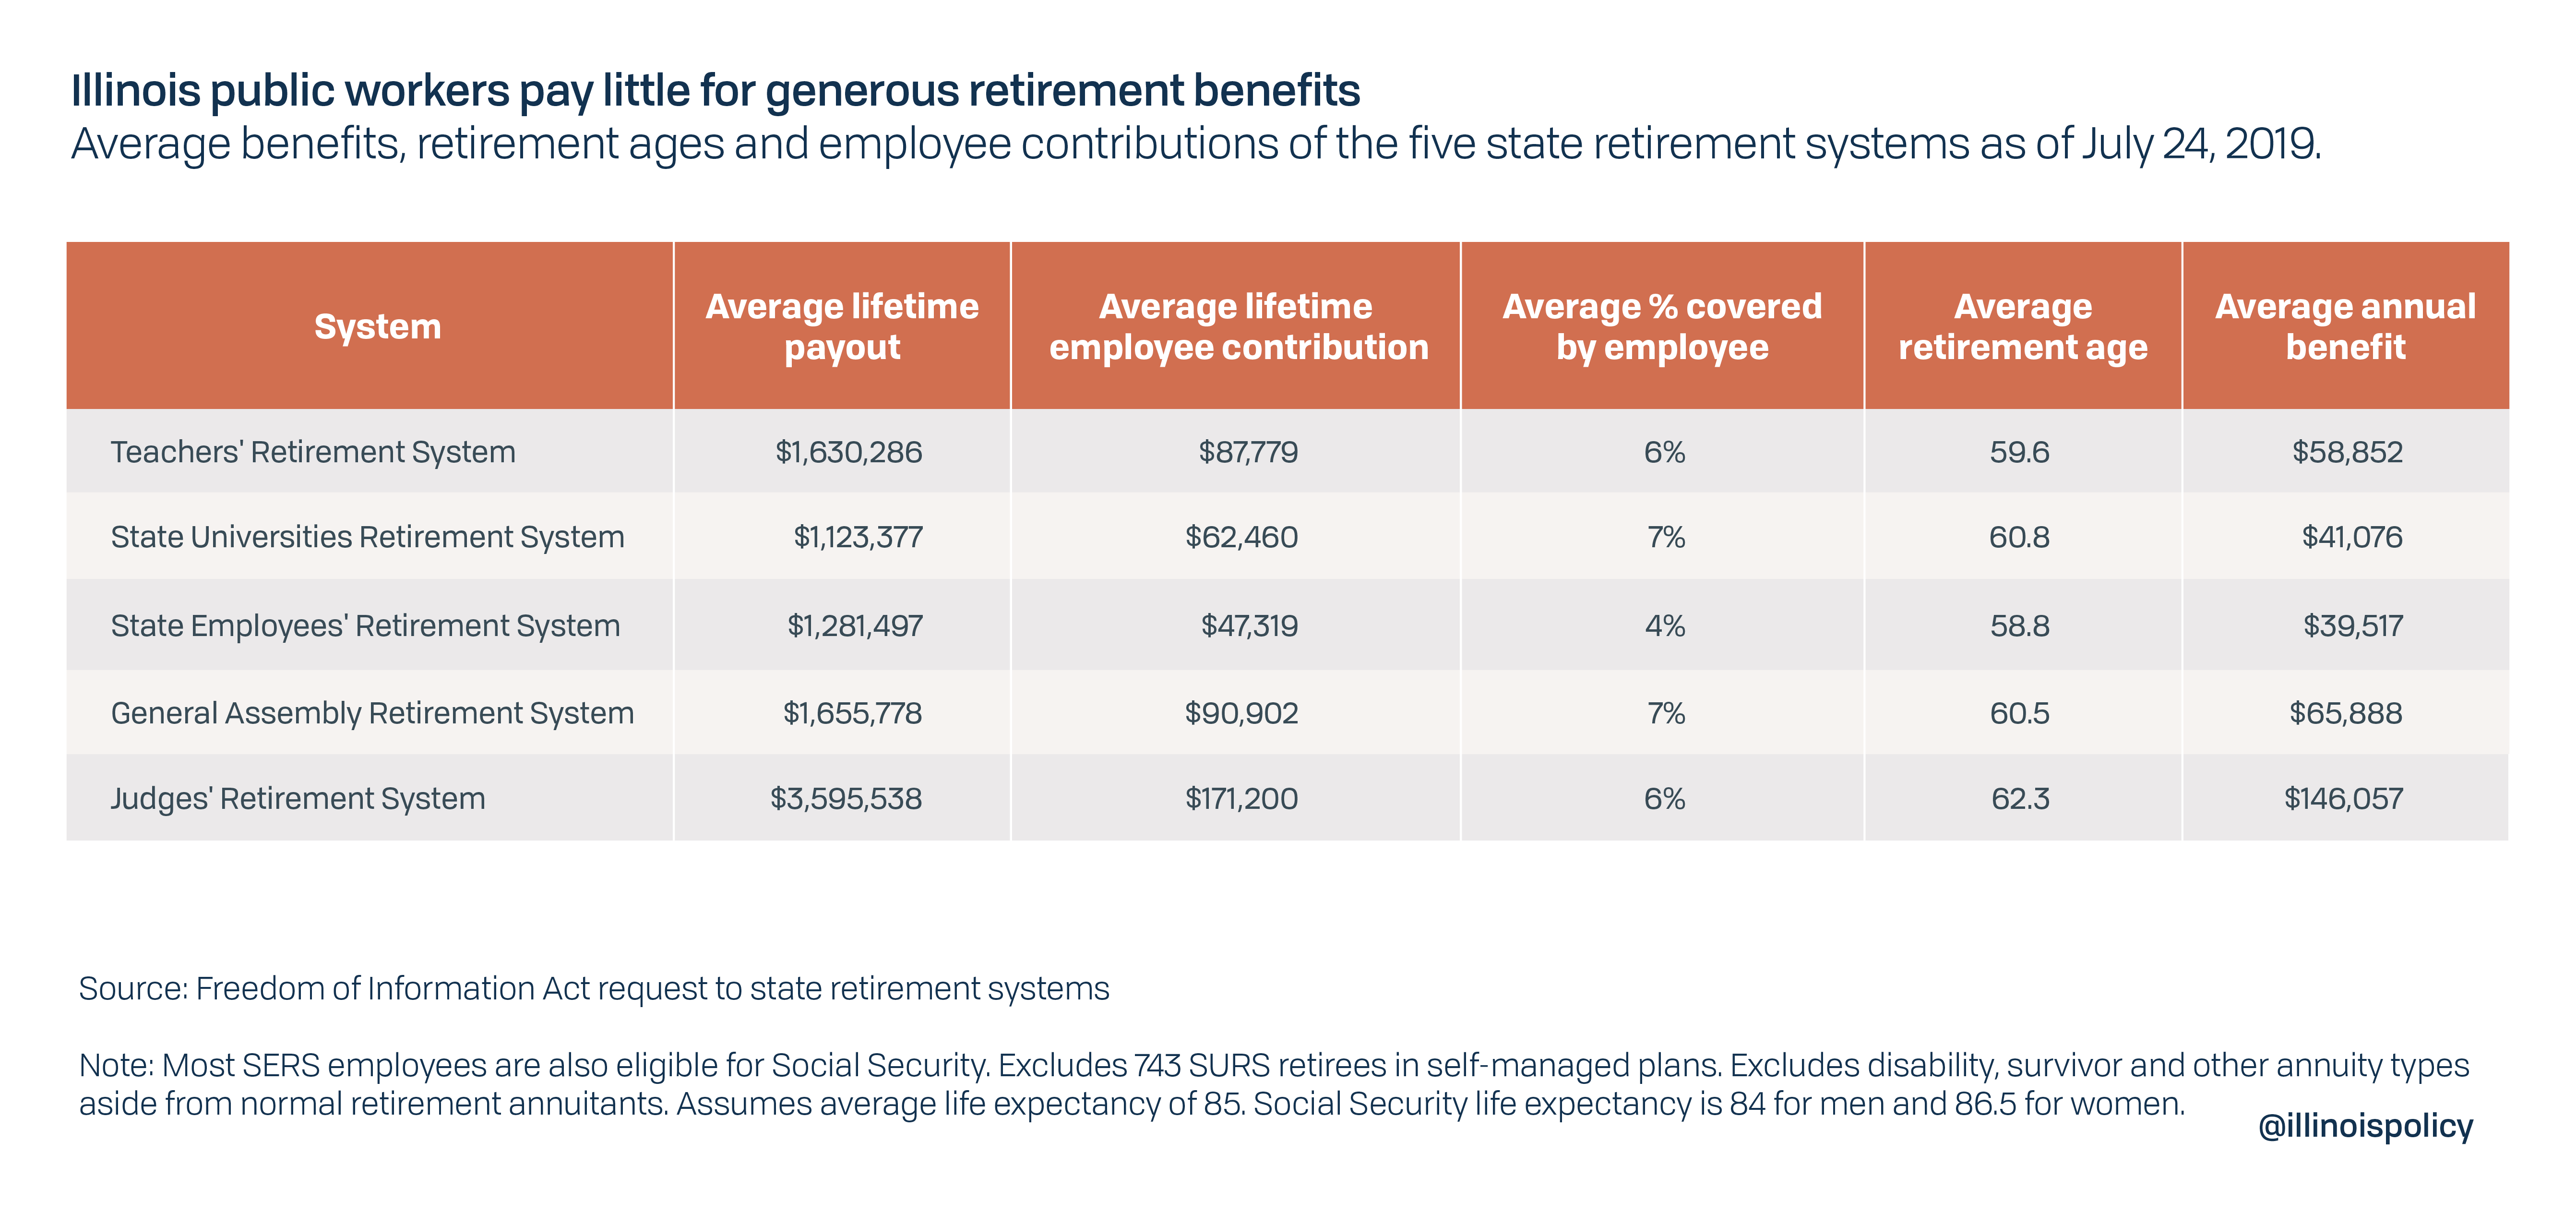 Illinois public workers pay little for generous retirement benefits